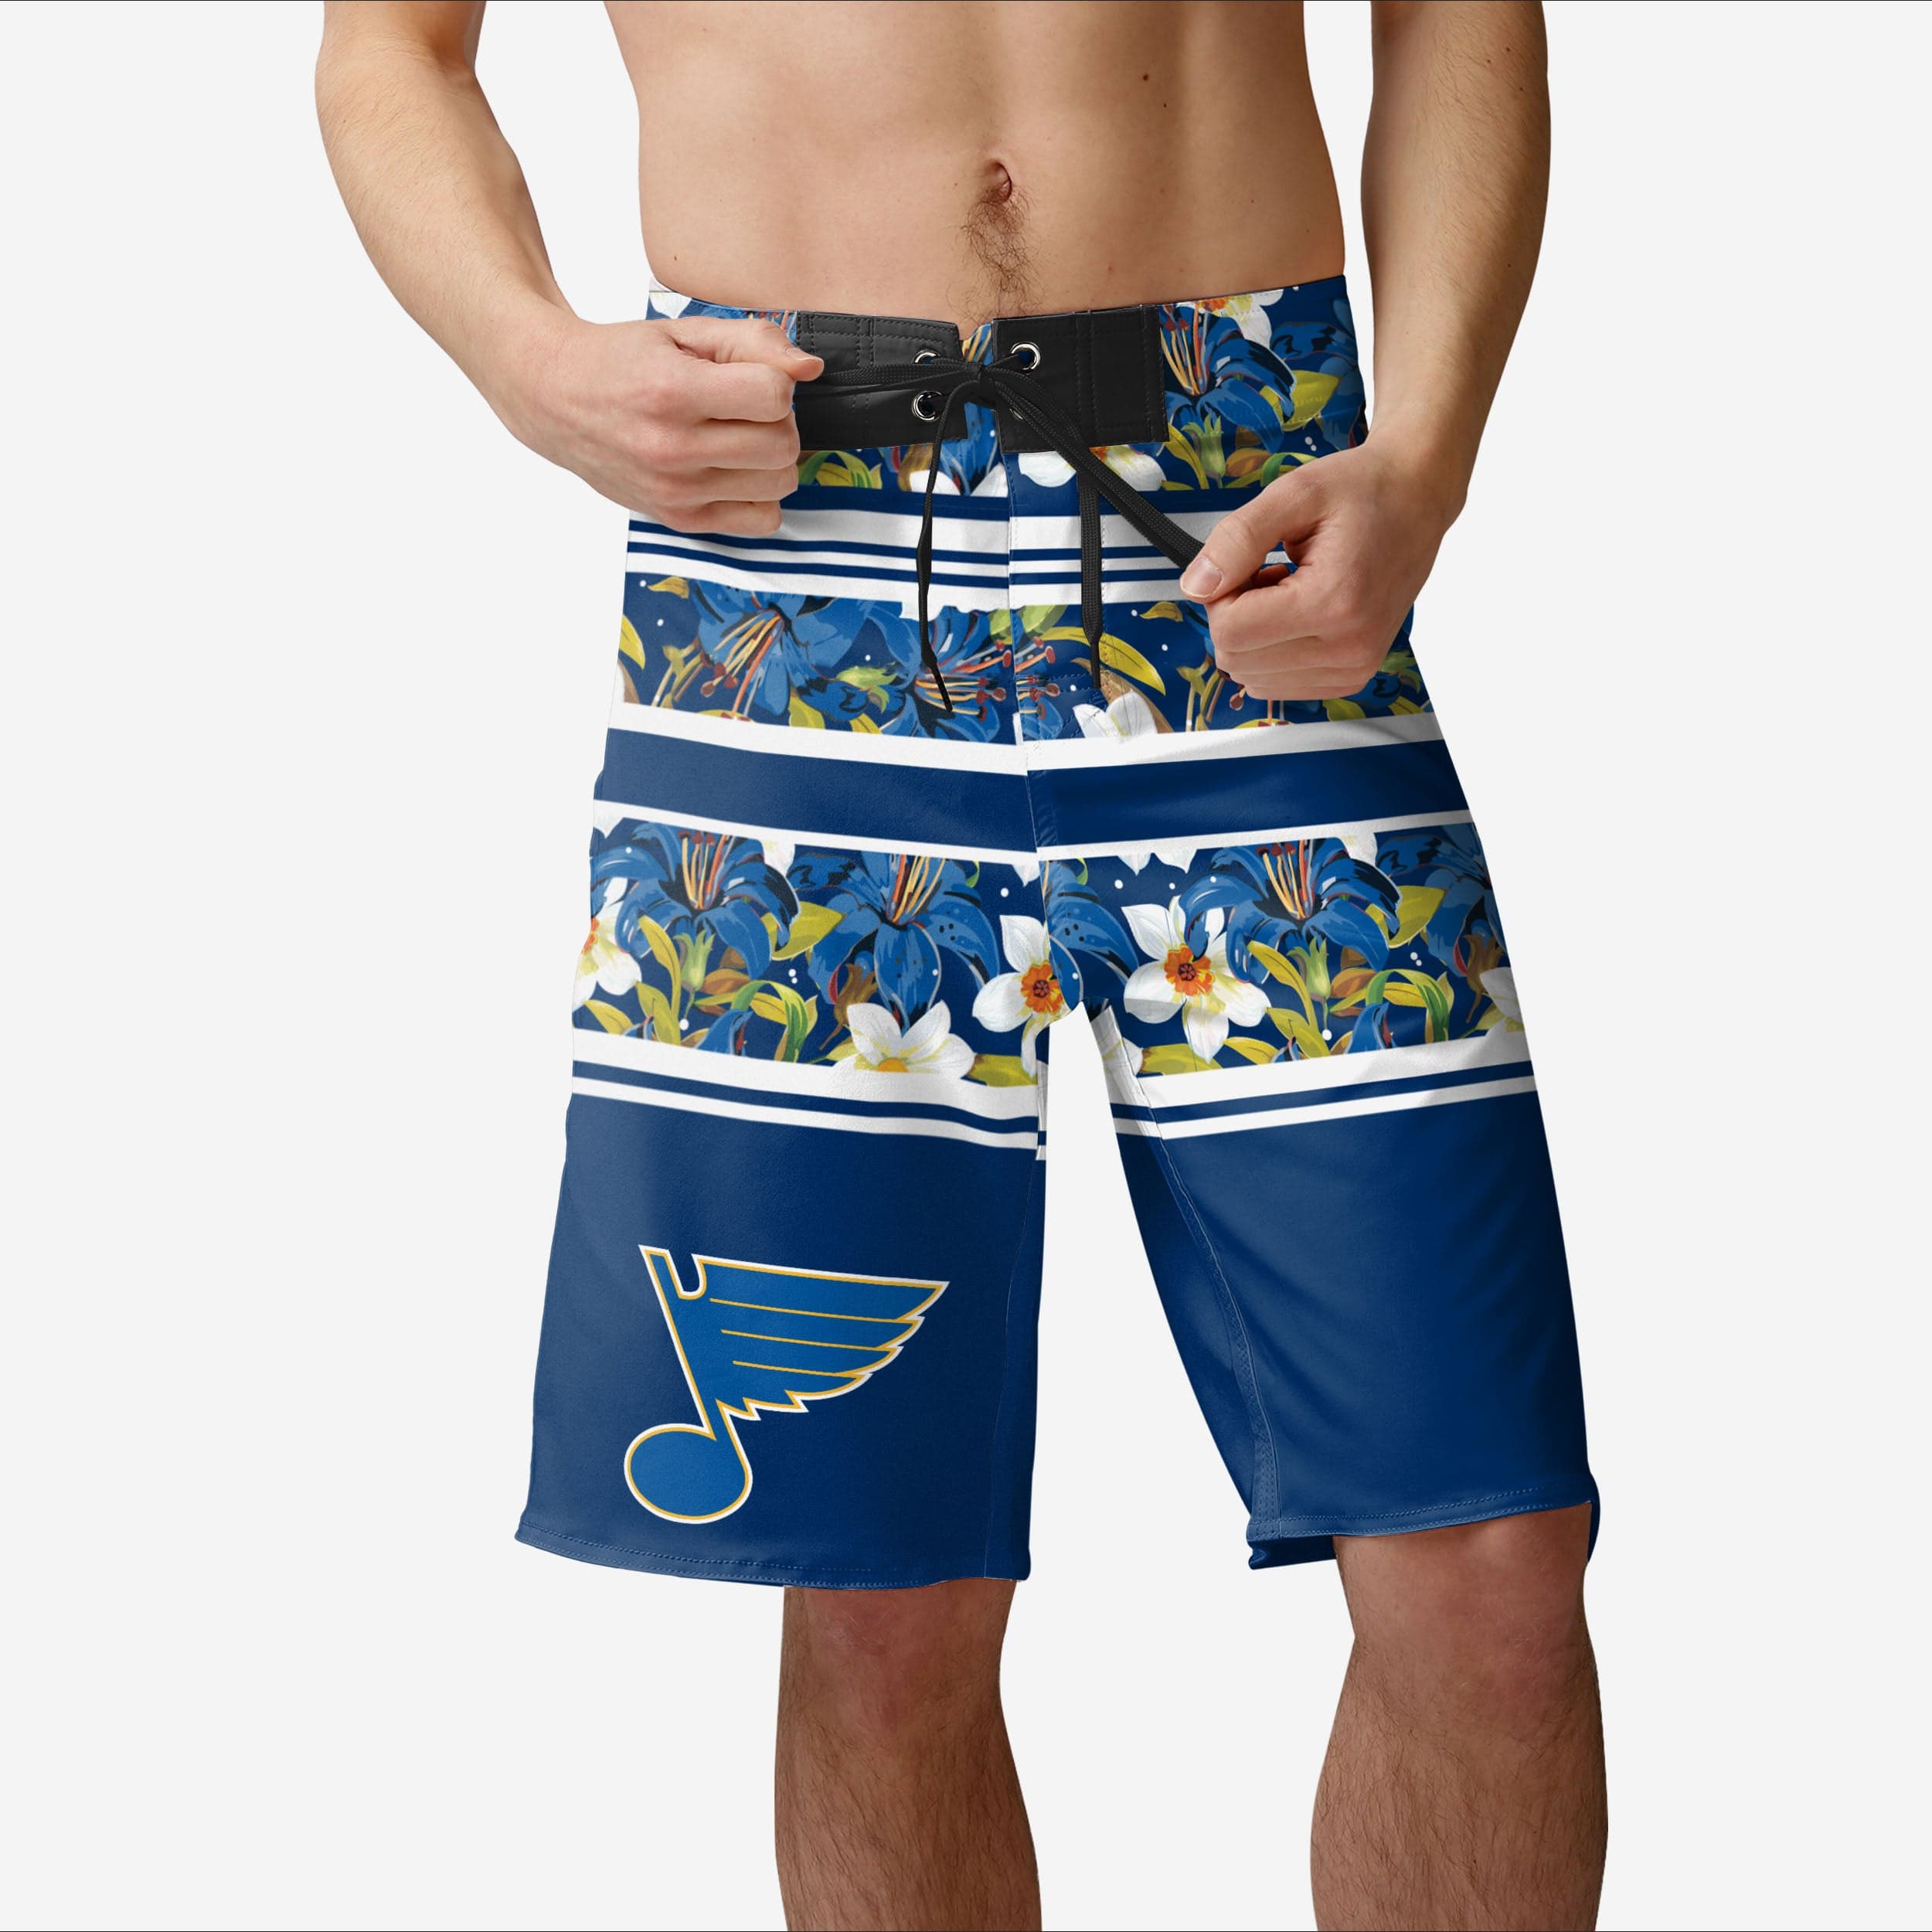 St Louis Blues Mens Pajama Pants Sleepwear Drawstring Hockey Blue Sz XL